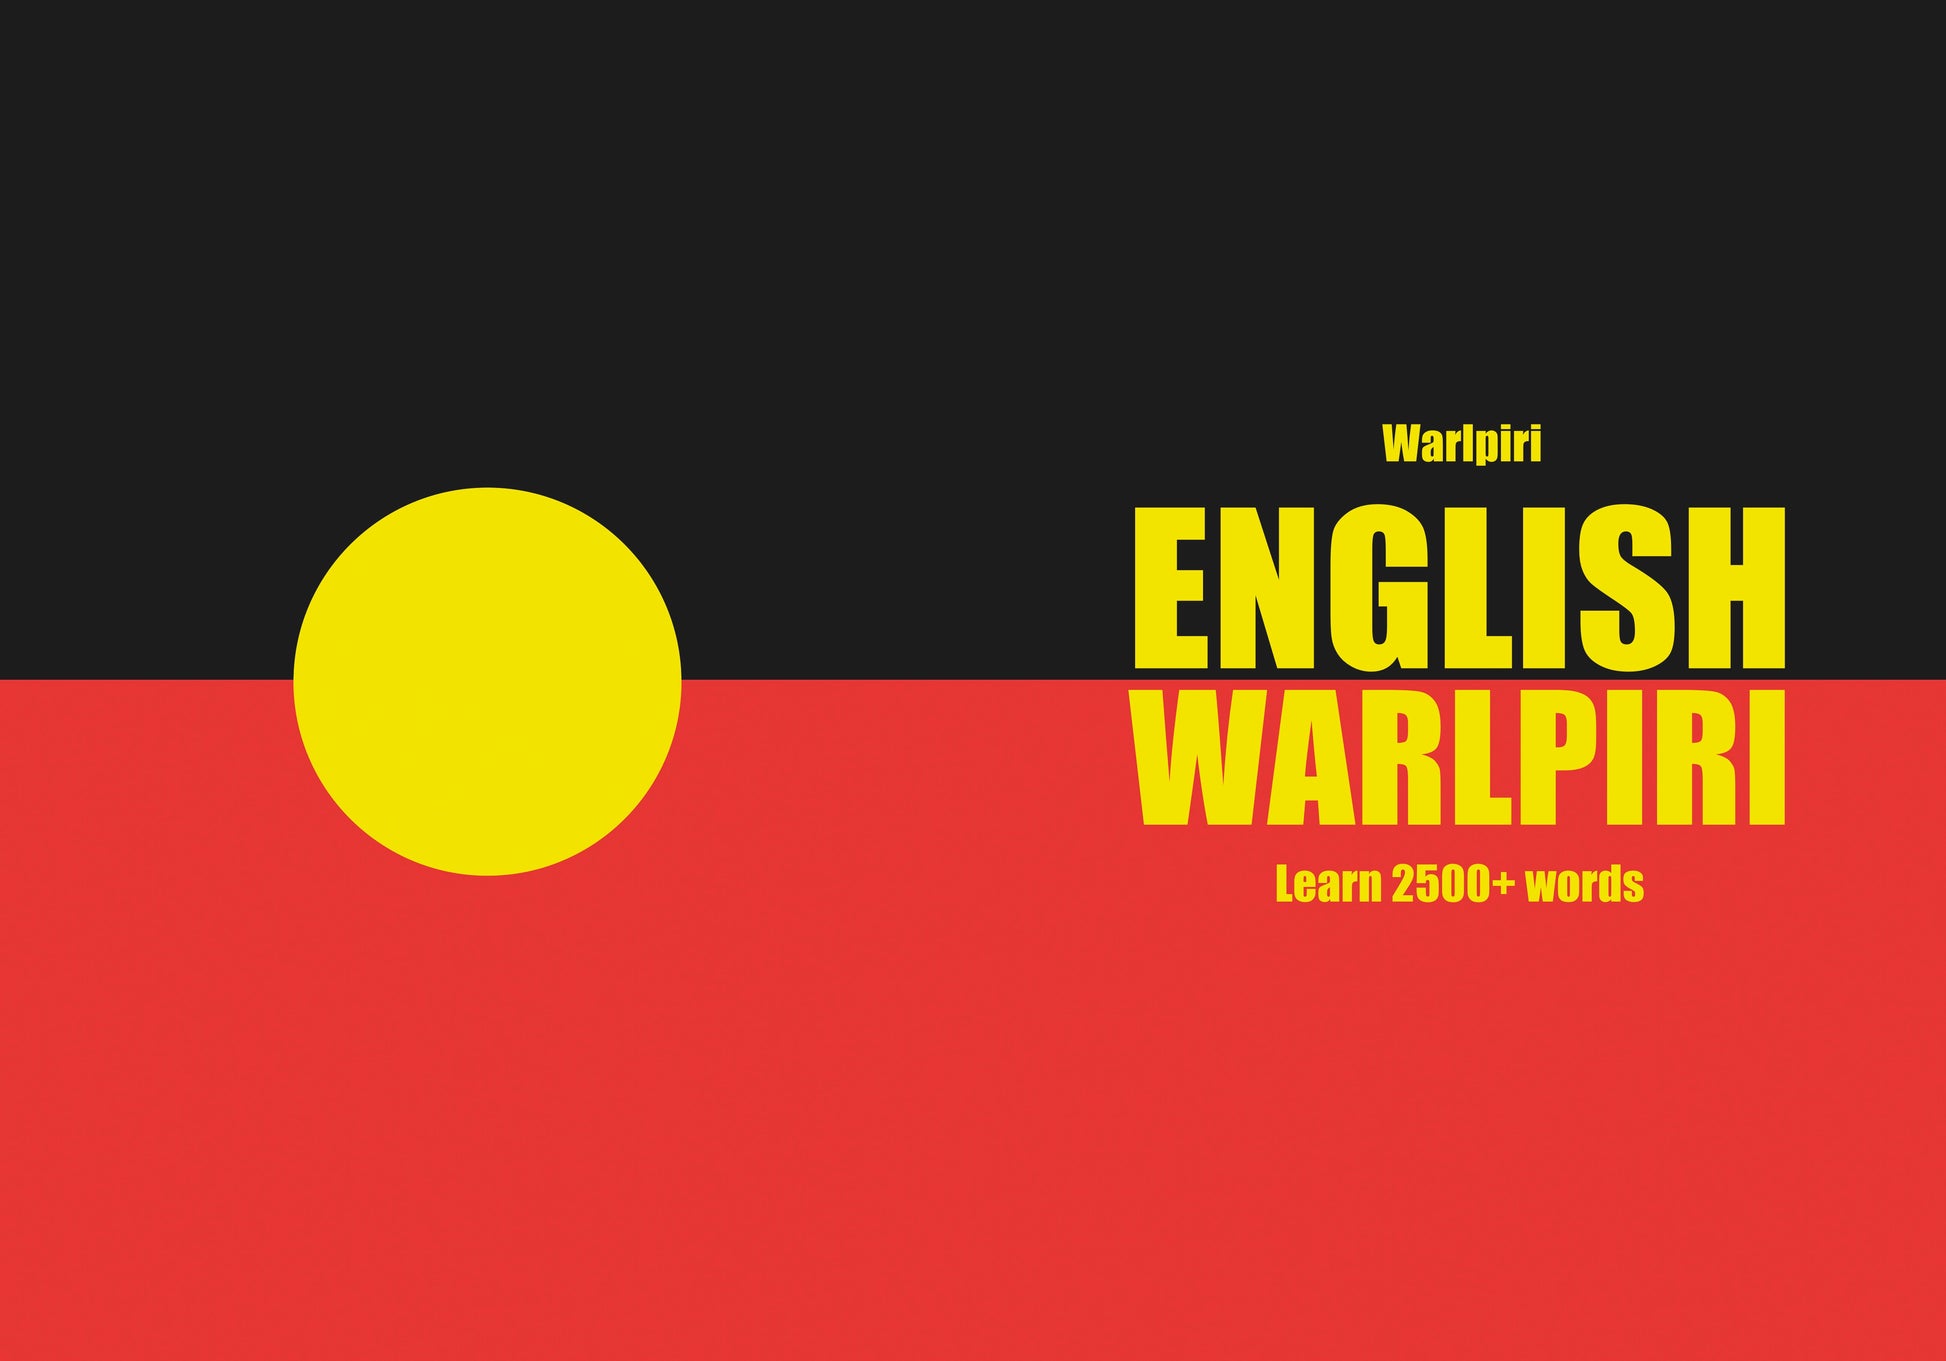 Warlpiri language learning notebook cover